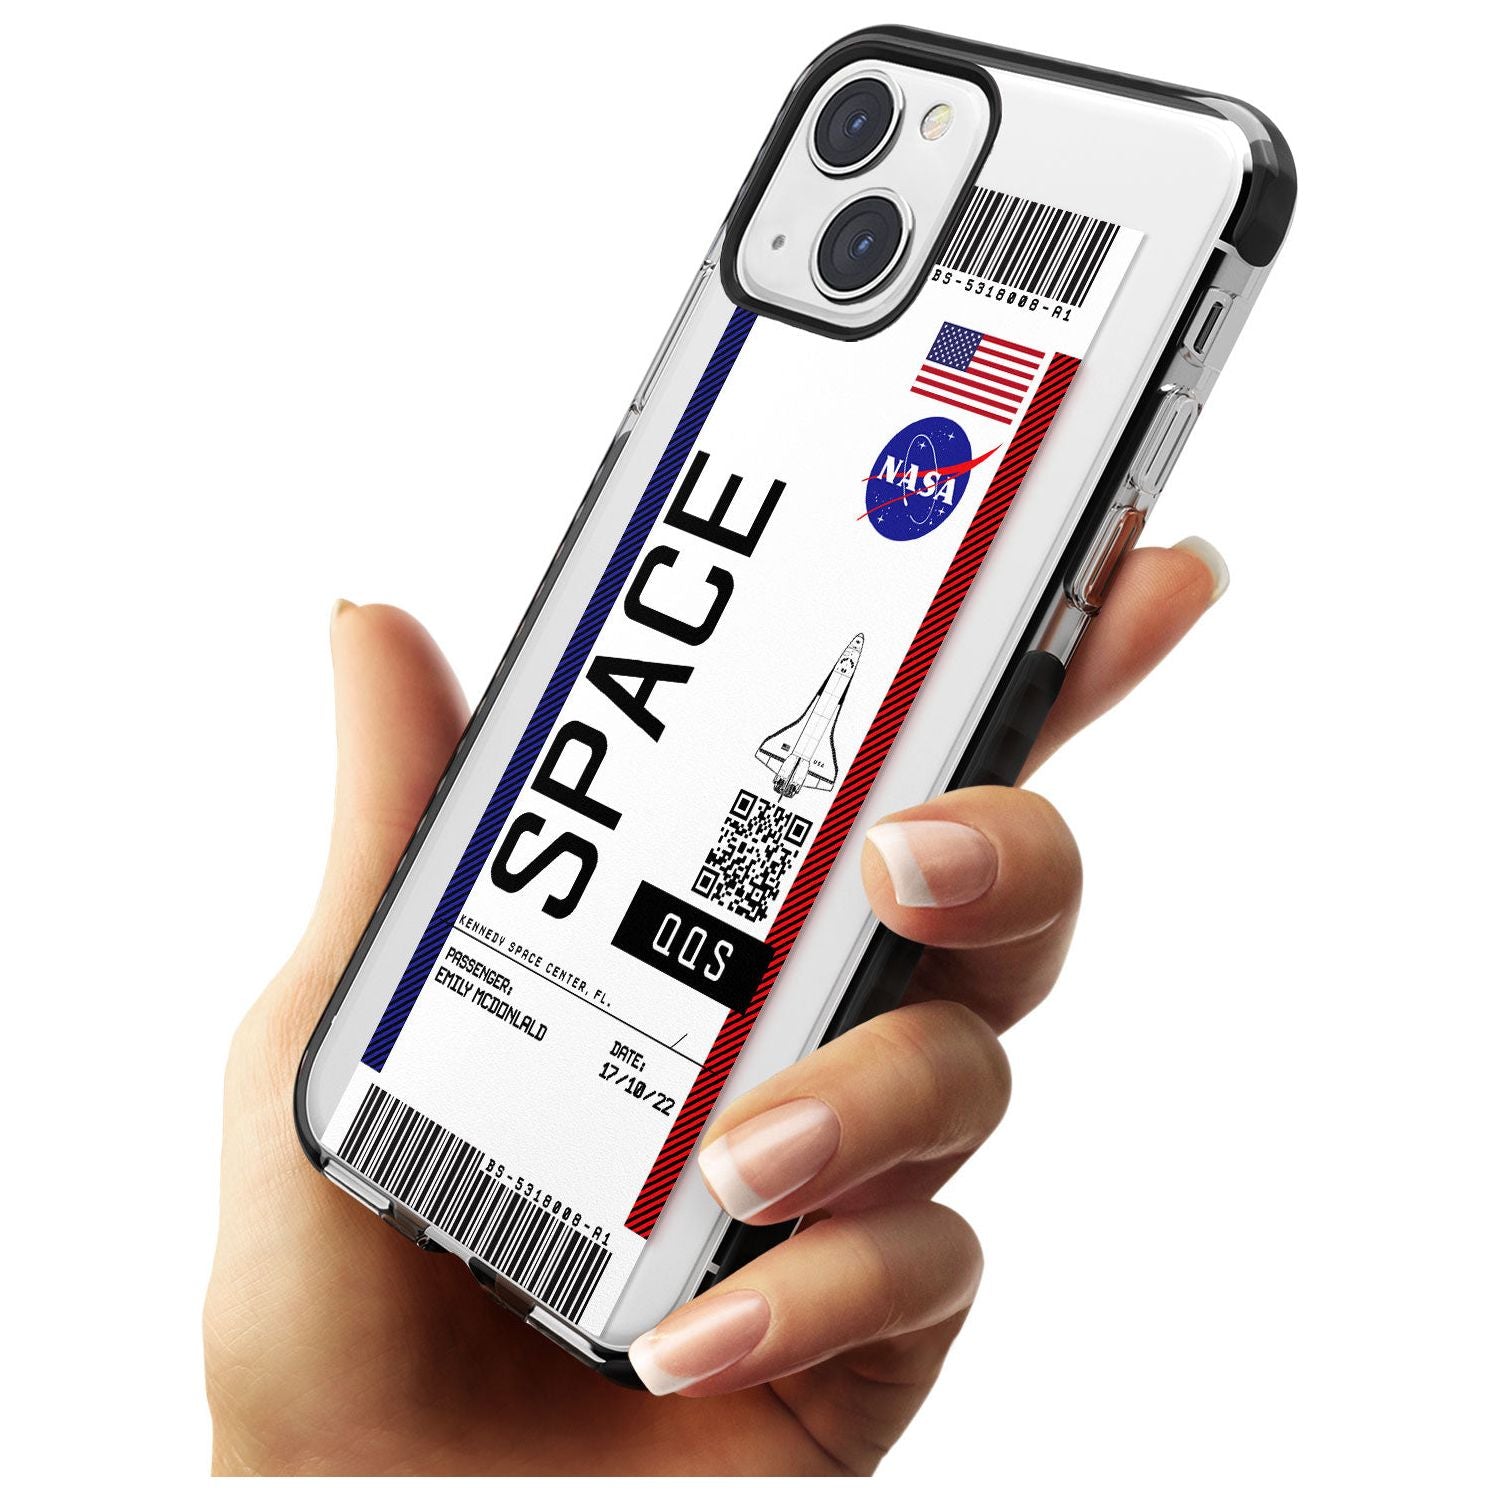 Personalised NASA Boarding Pass (Light) Black Impact Phone Case for iPhone 13 & 13 Mini